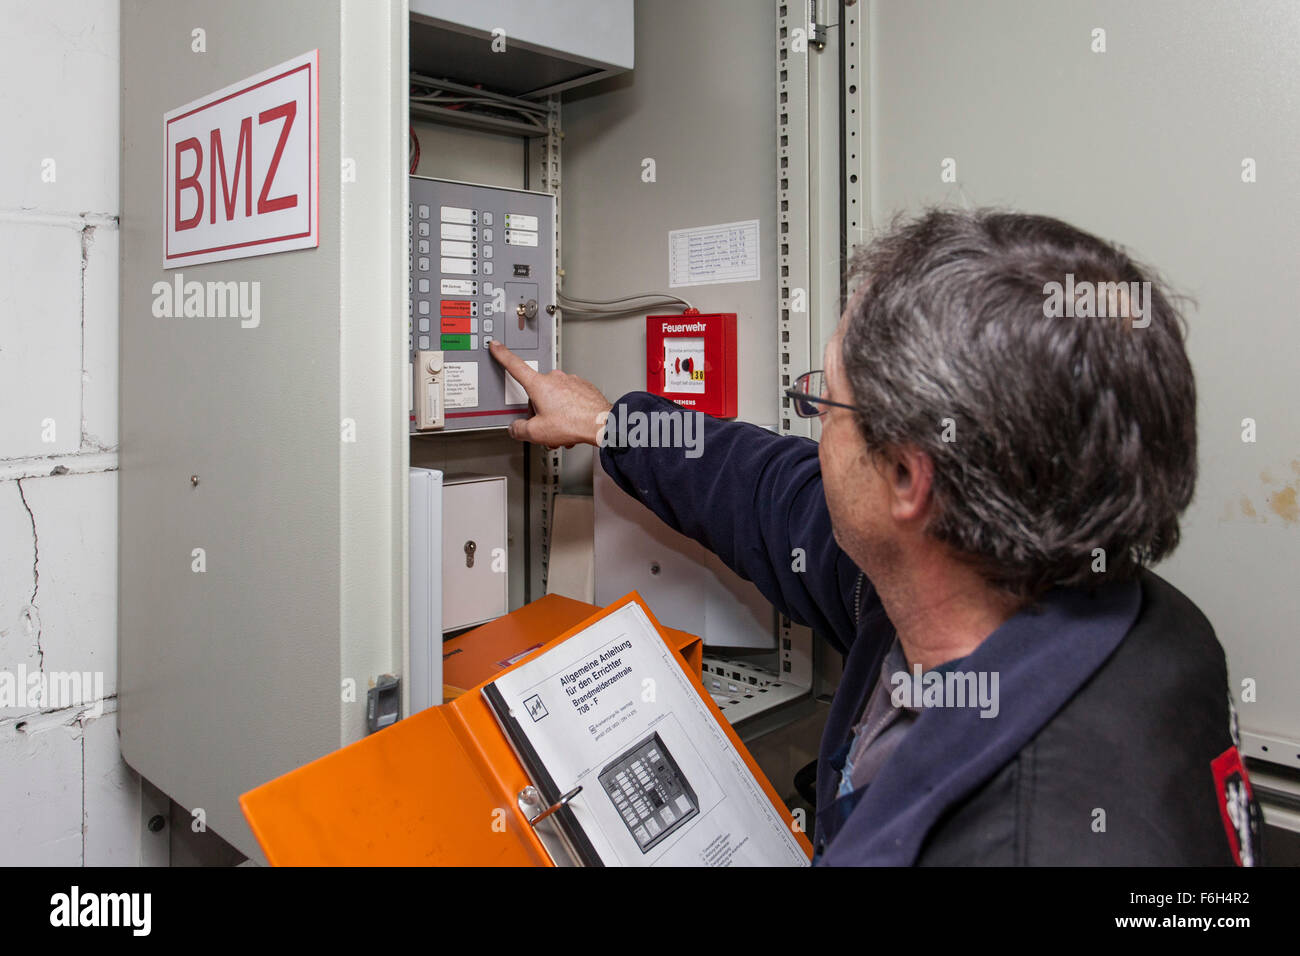 Caretaker checks a central fire alarm system into residential building. Stock Photo